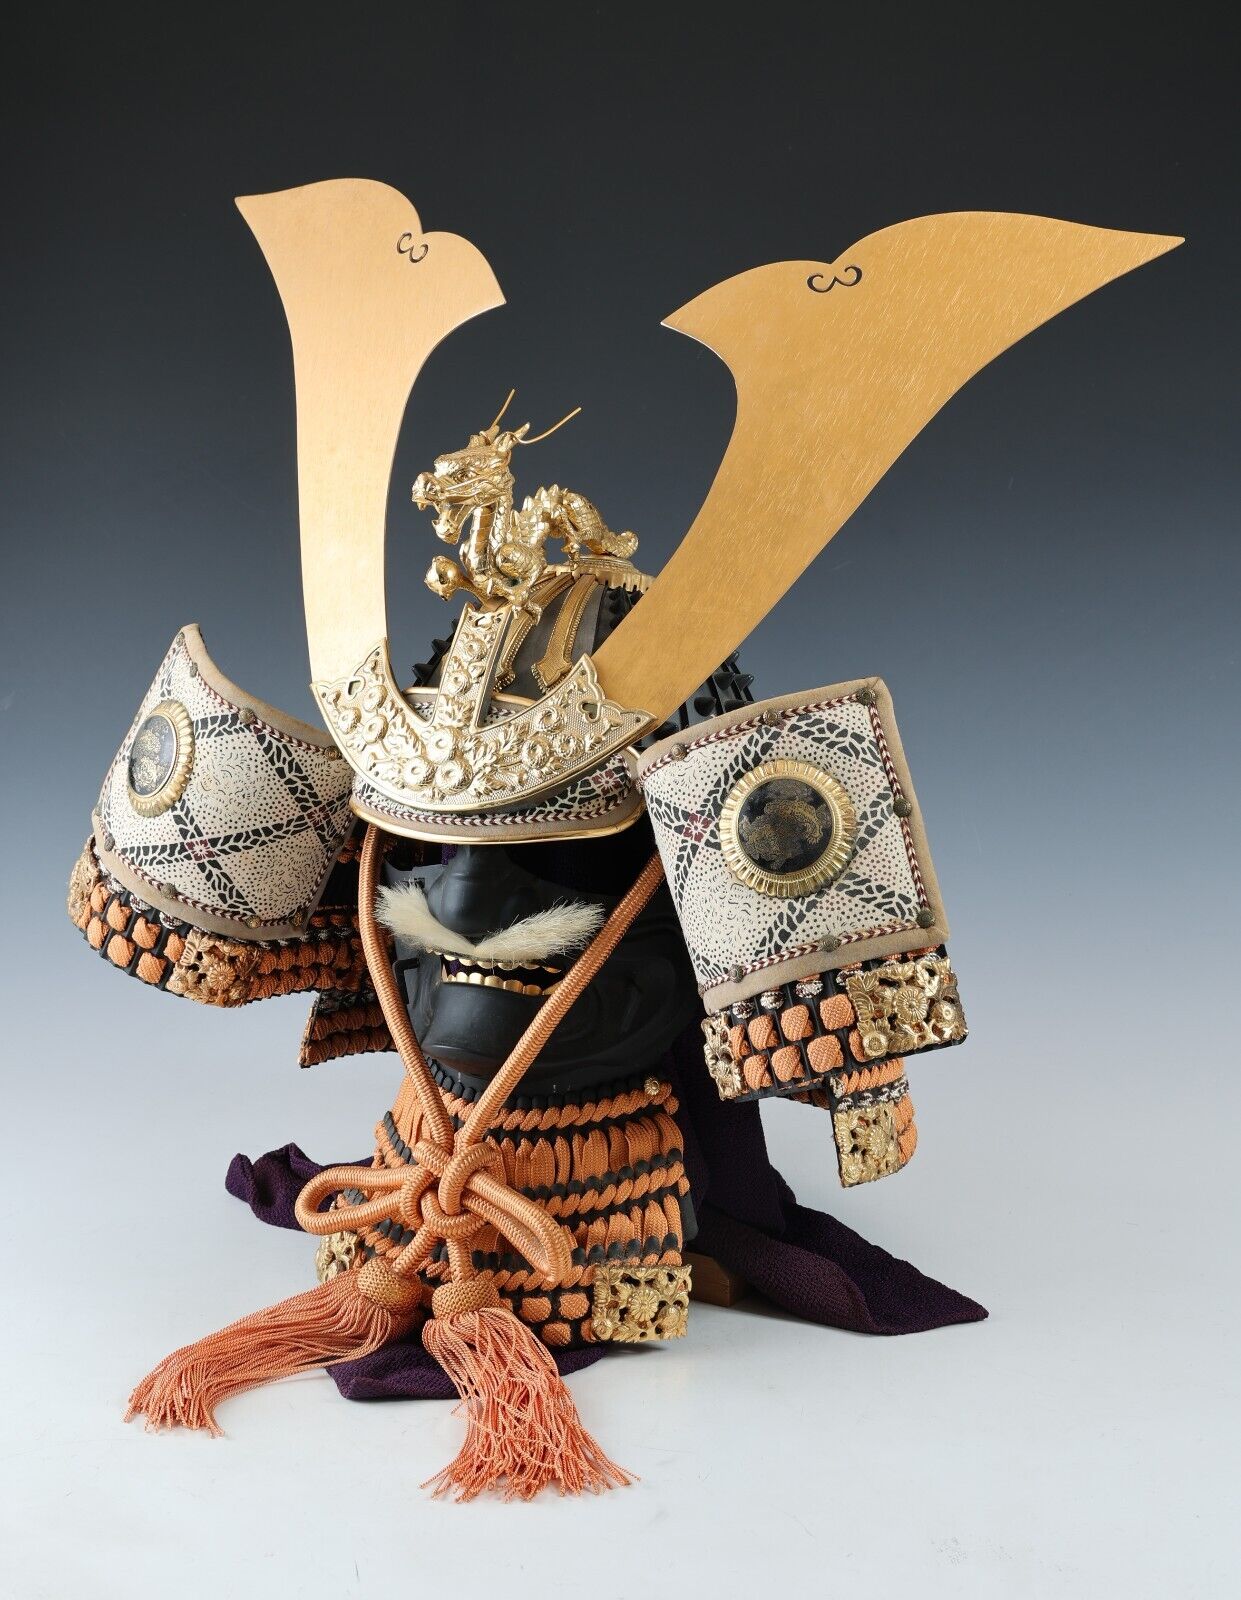 Old Japanese Samurai Decorative Kabuto Headgear Helmet Mask Collectible Samurai Armor.